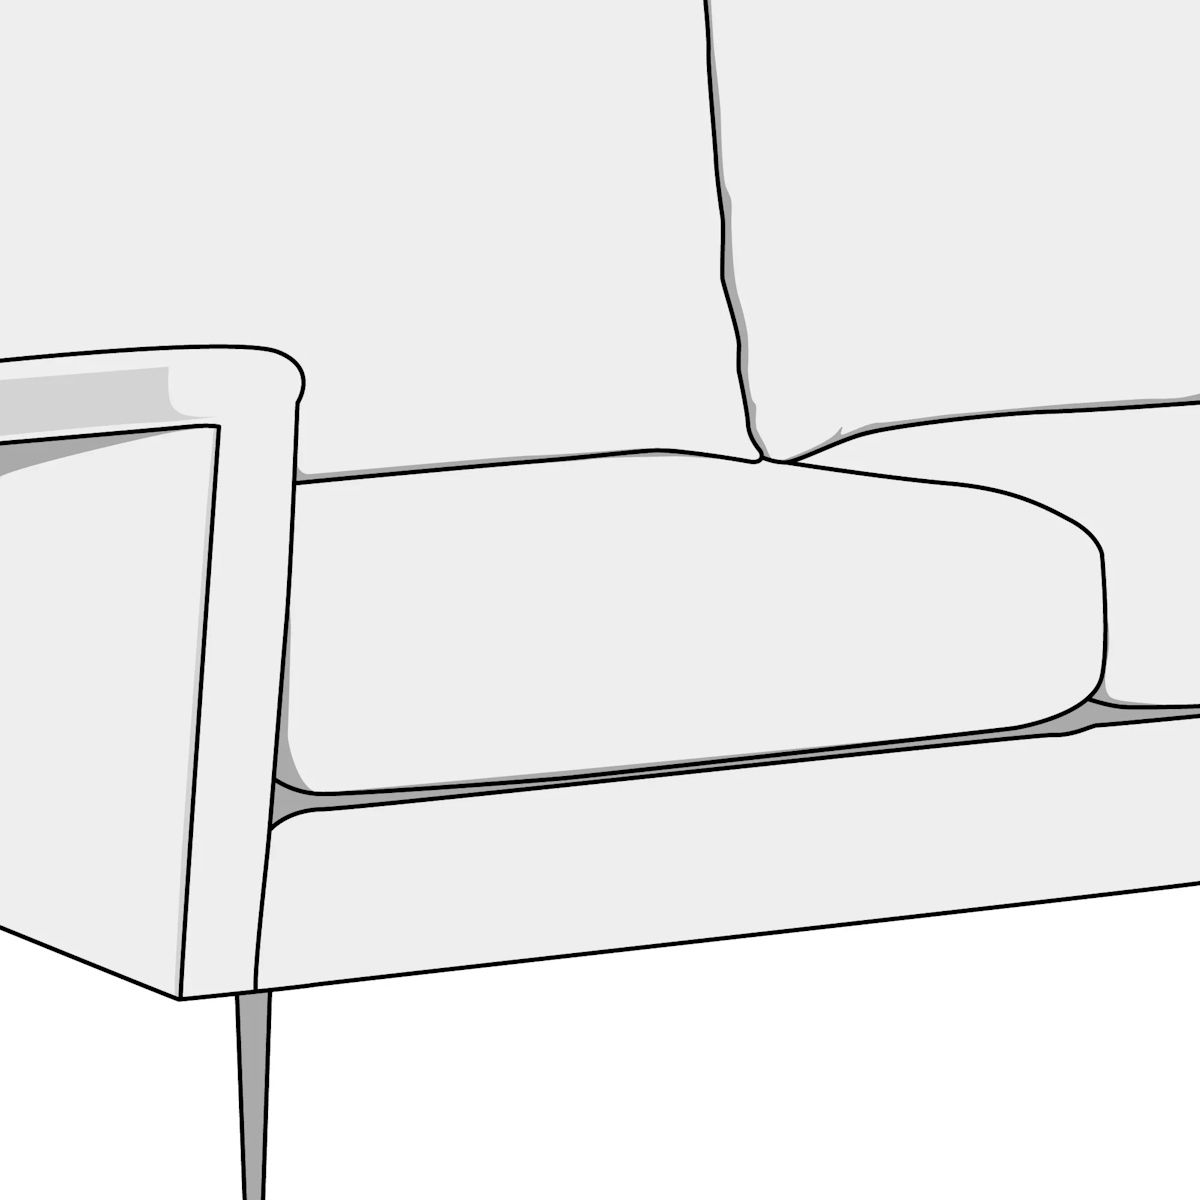 Illustration of waterfall sofa cushion style